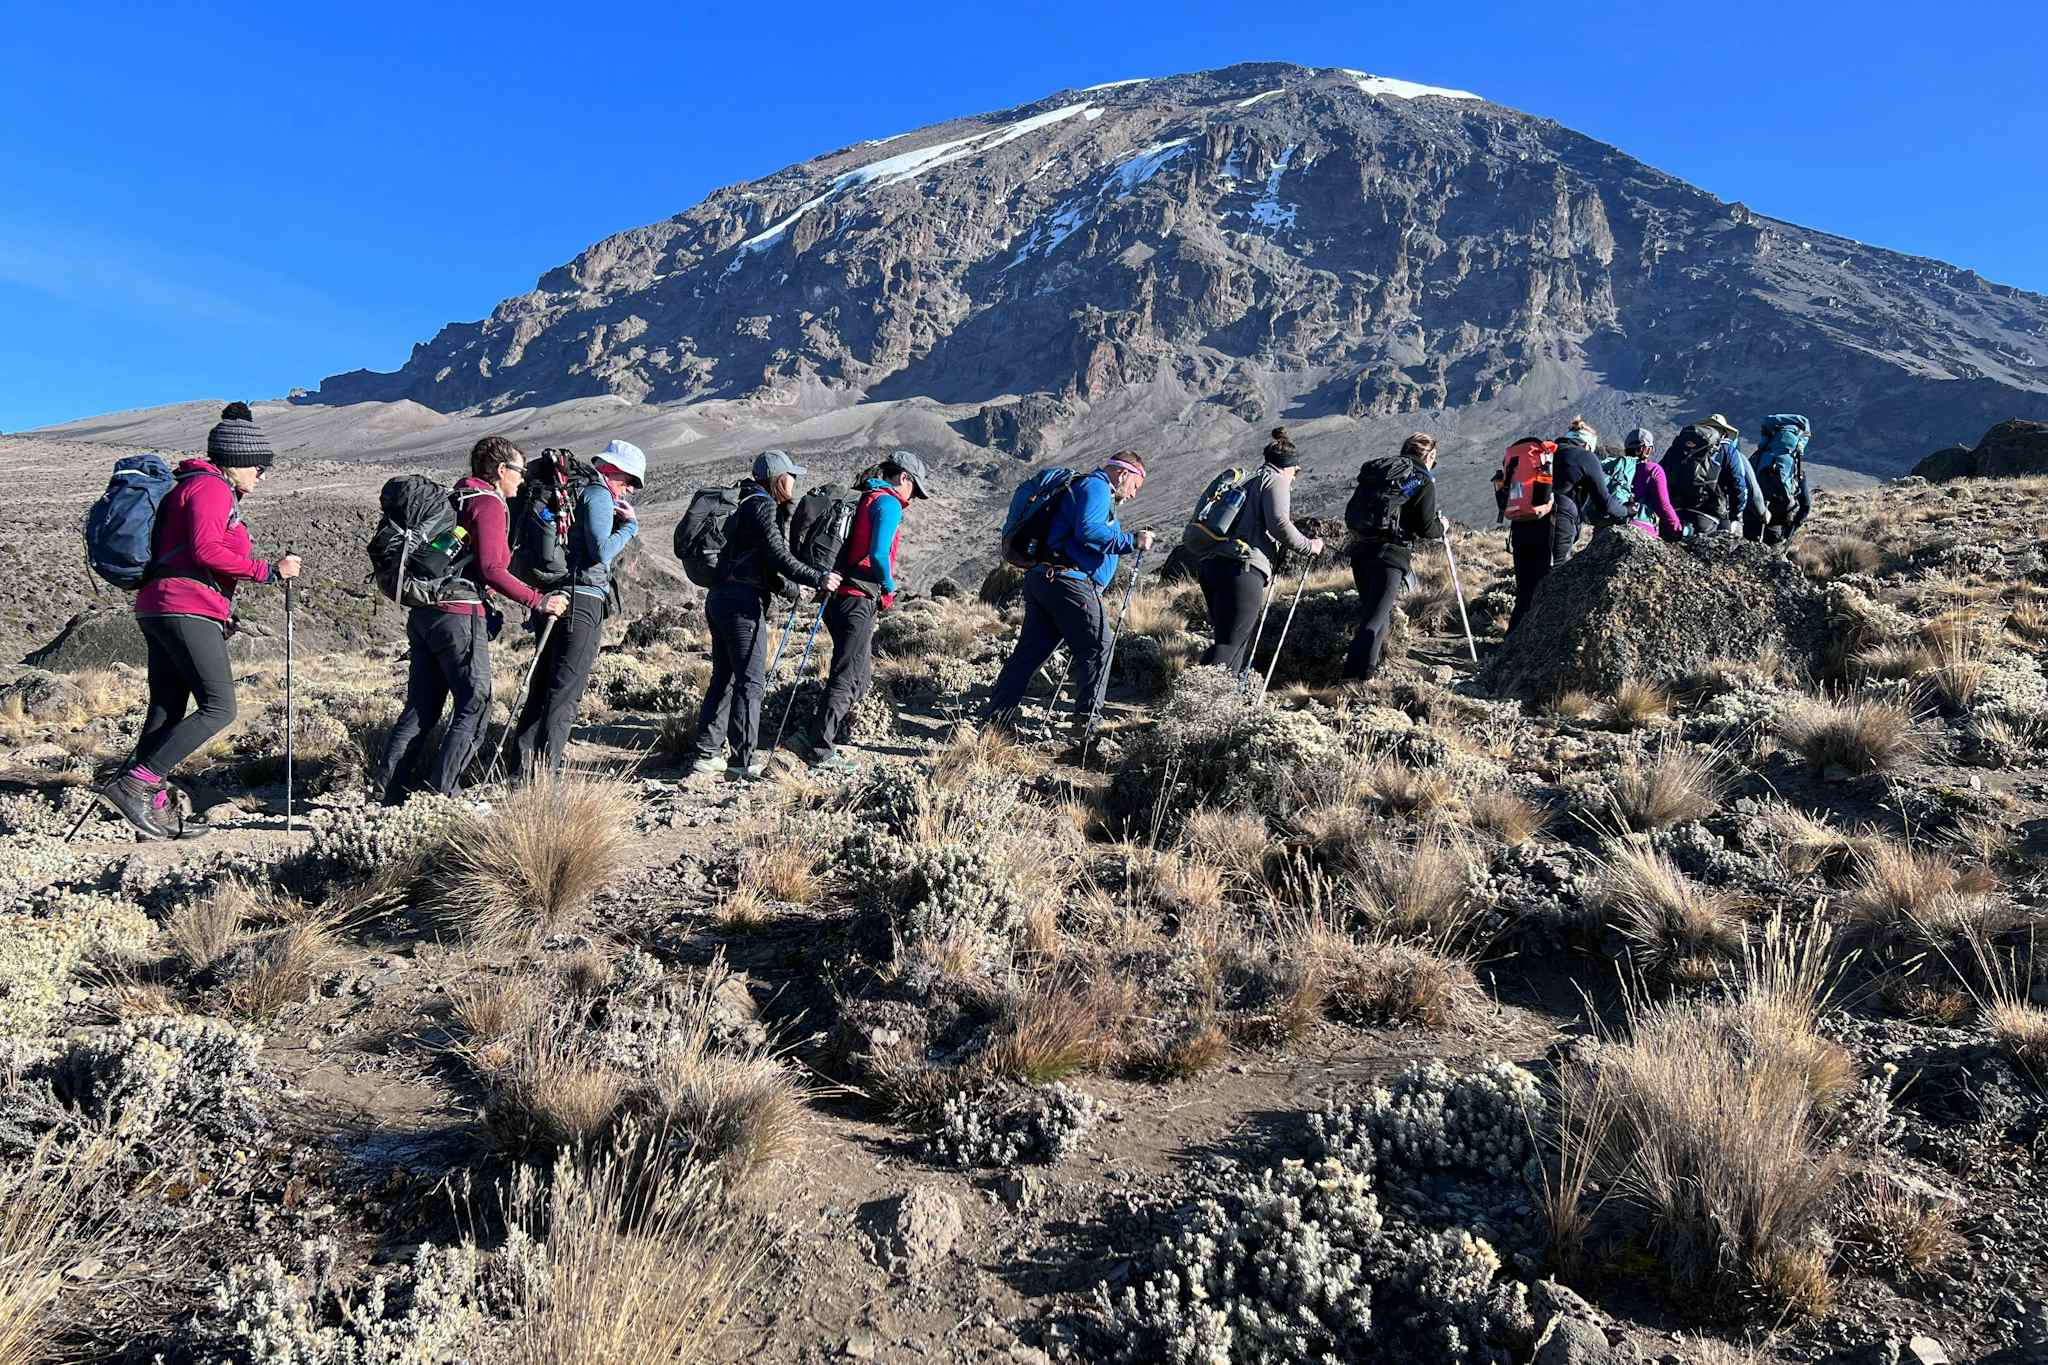 A group of trekkers hiking up Mount Kilimanjaro, Tanzania.